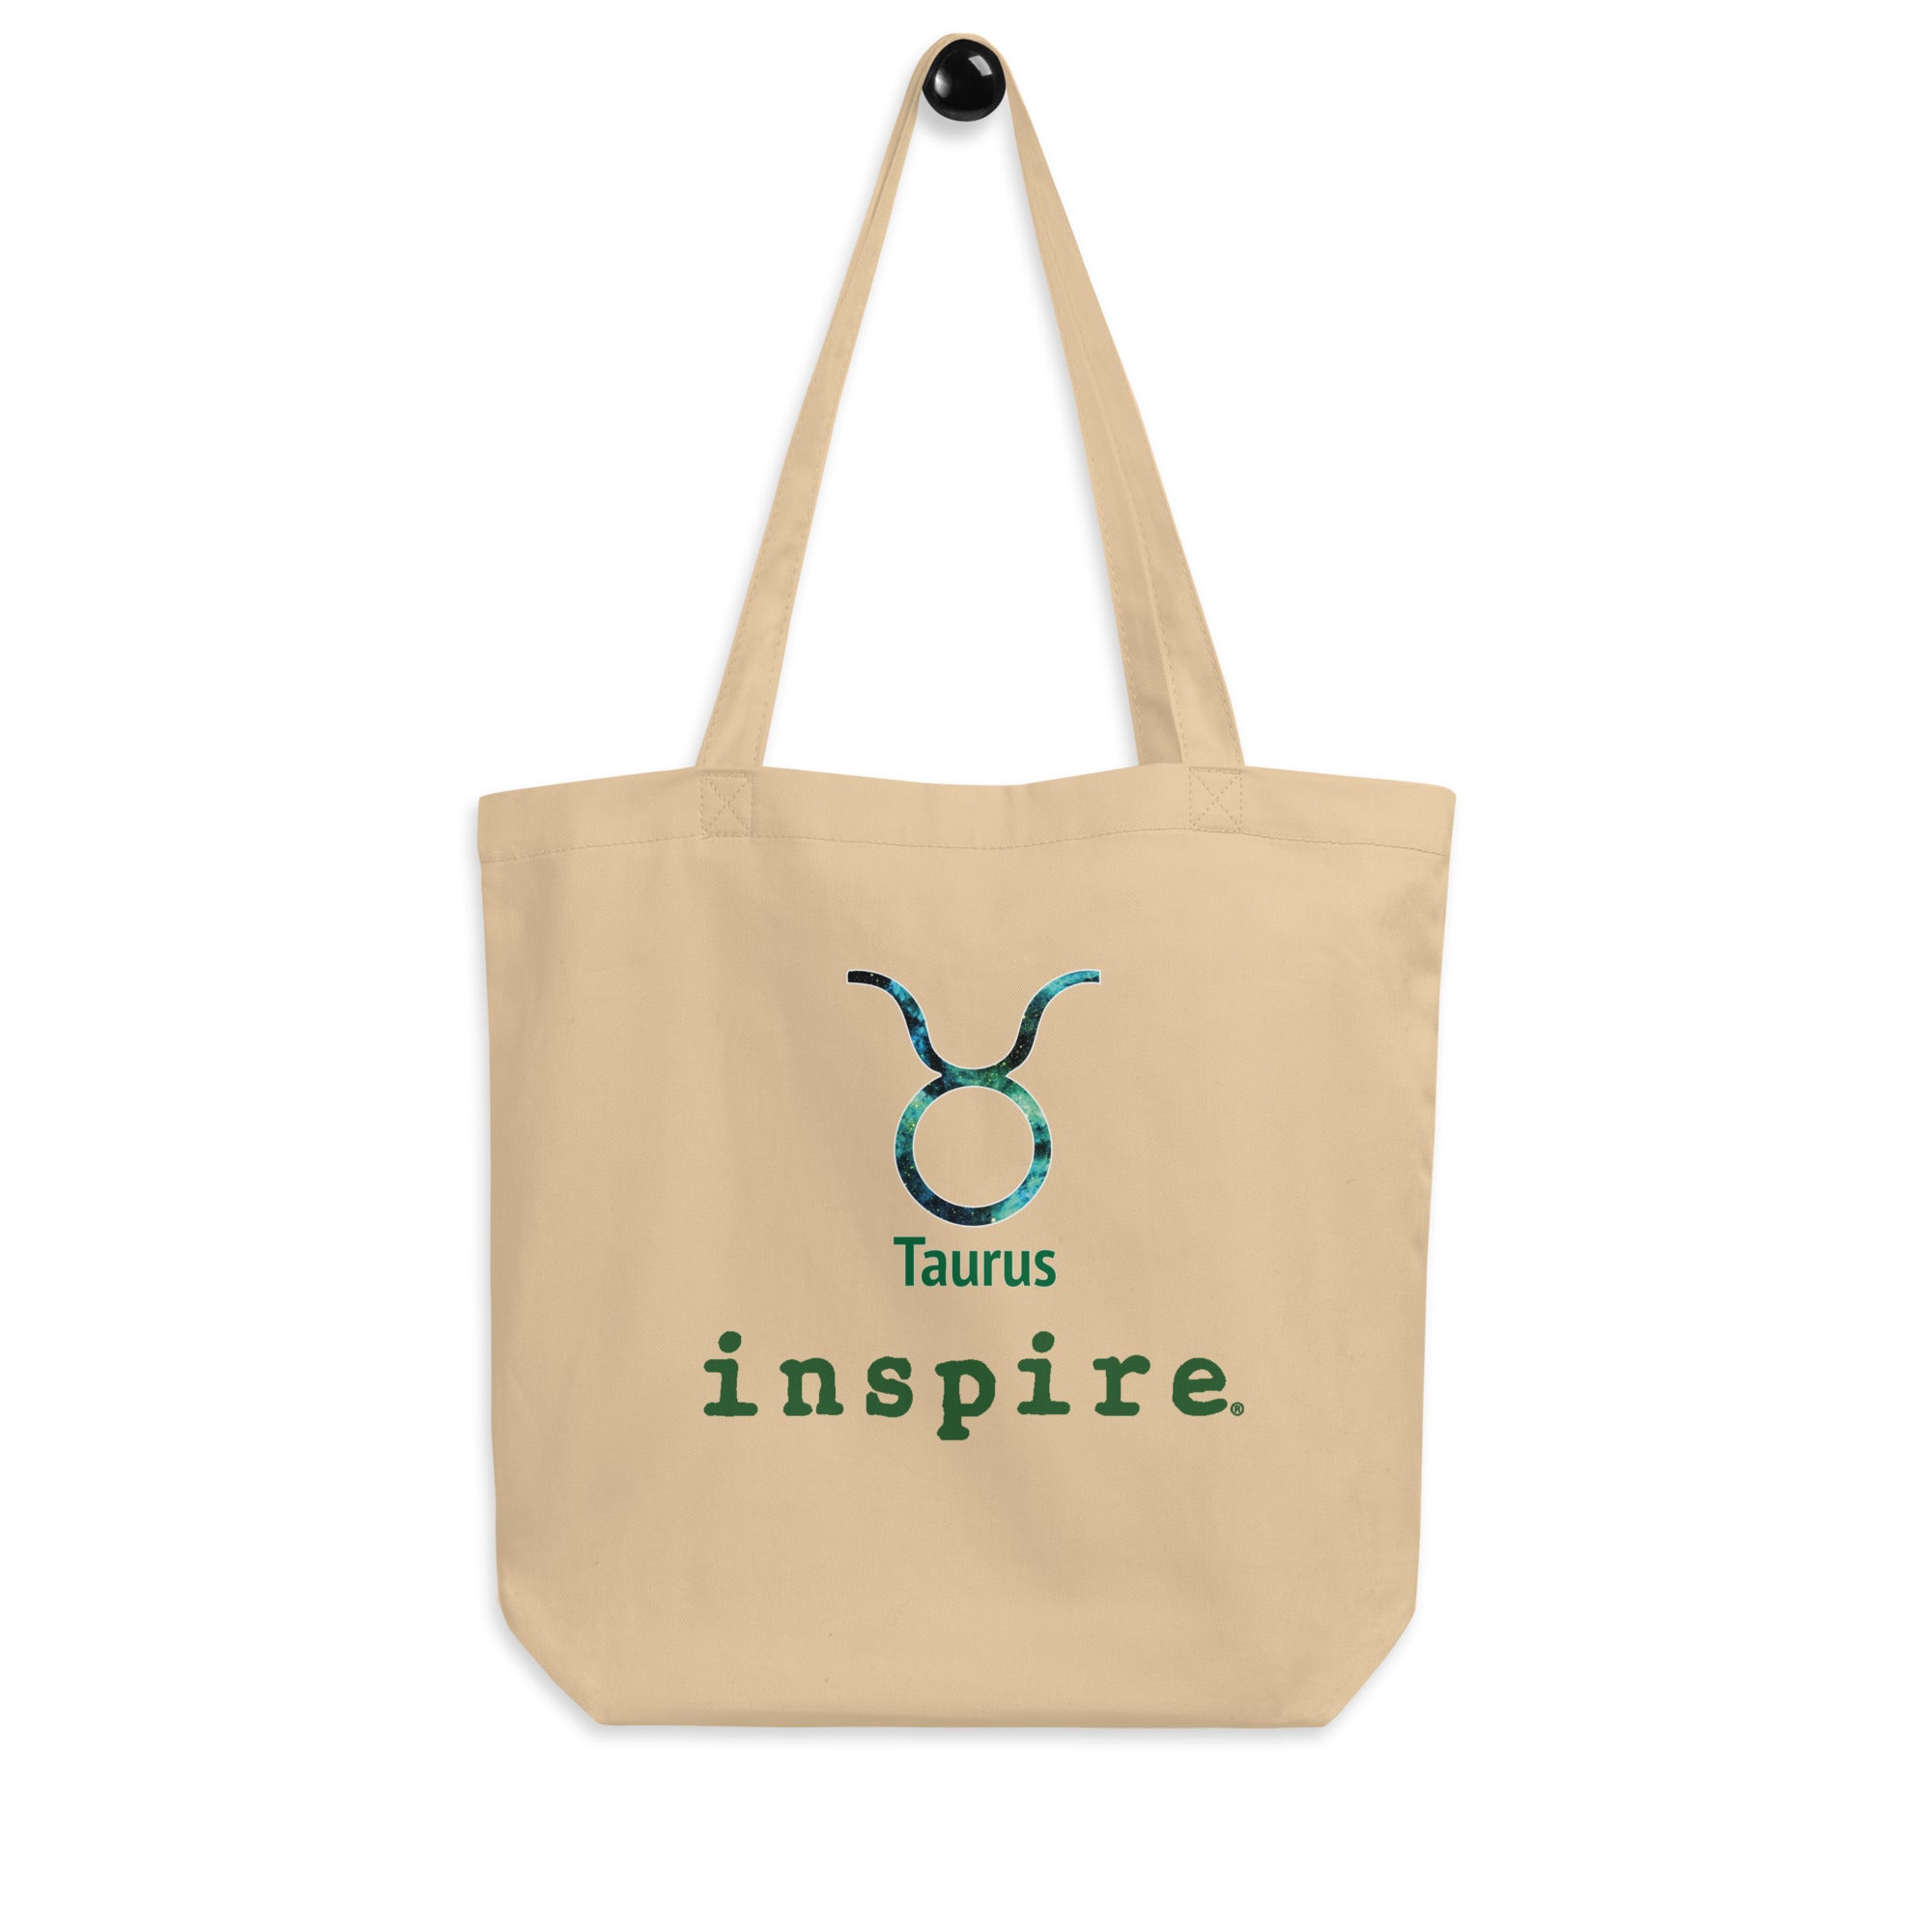 inspire Taurus Eco Tote Bag